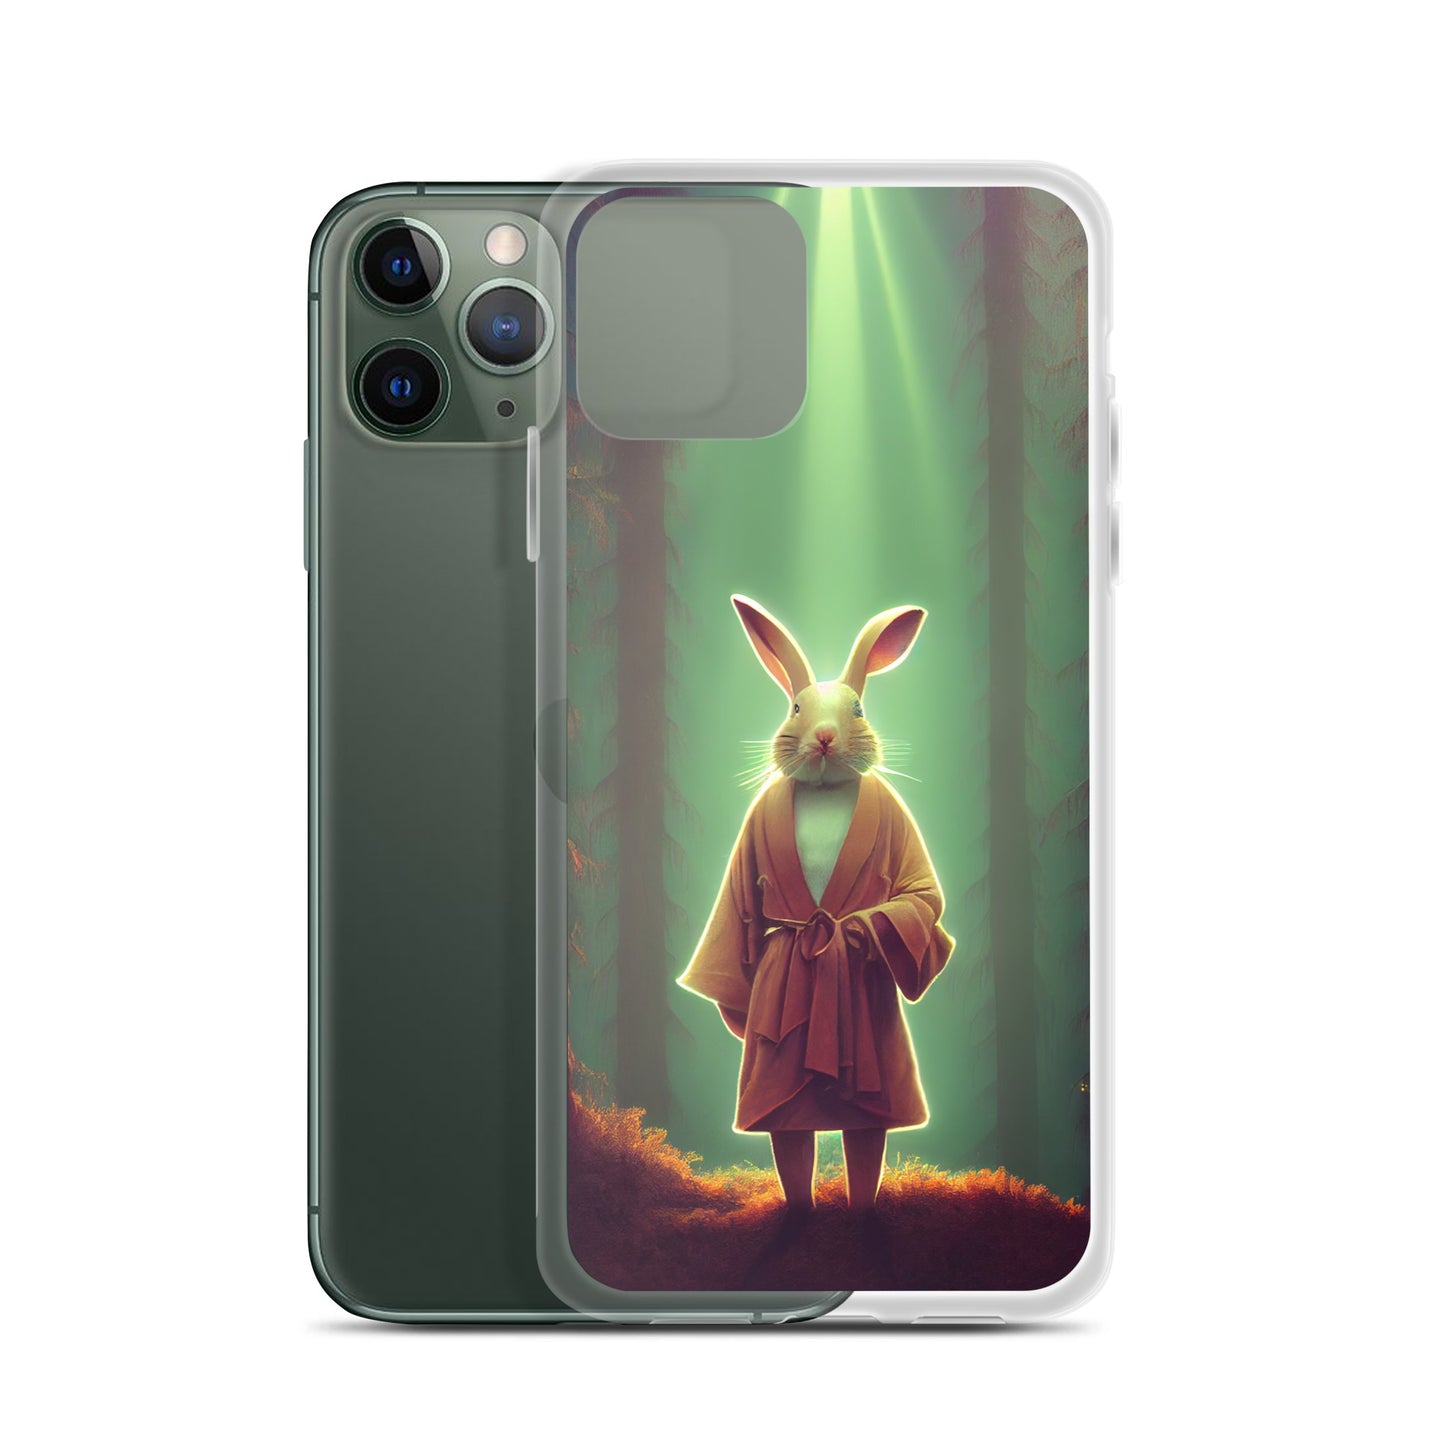 iPhone Case - Rabbit Master